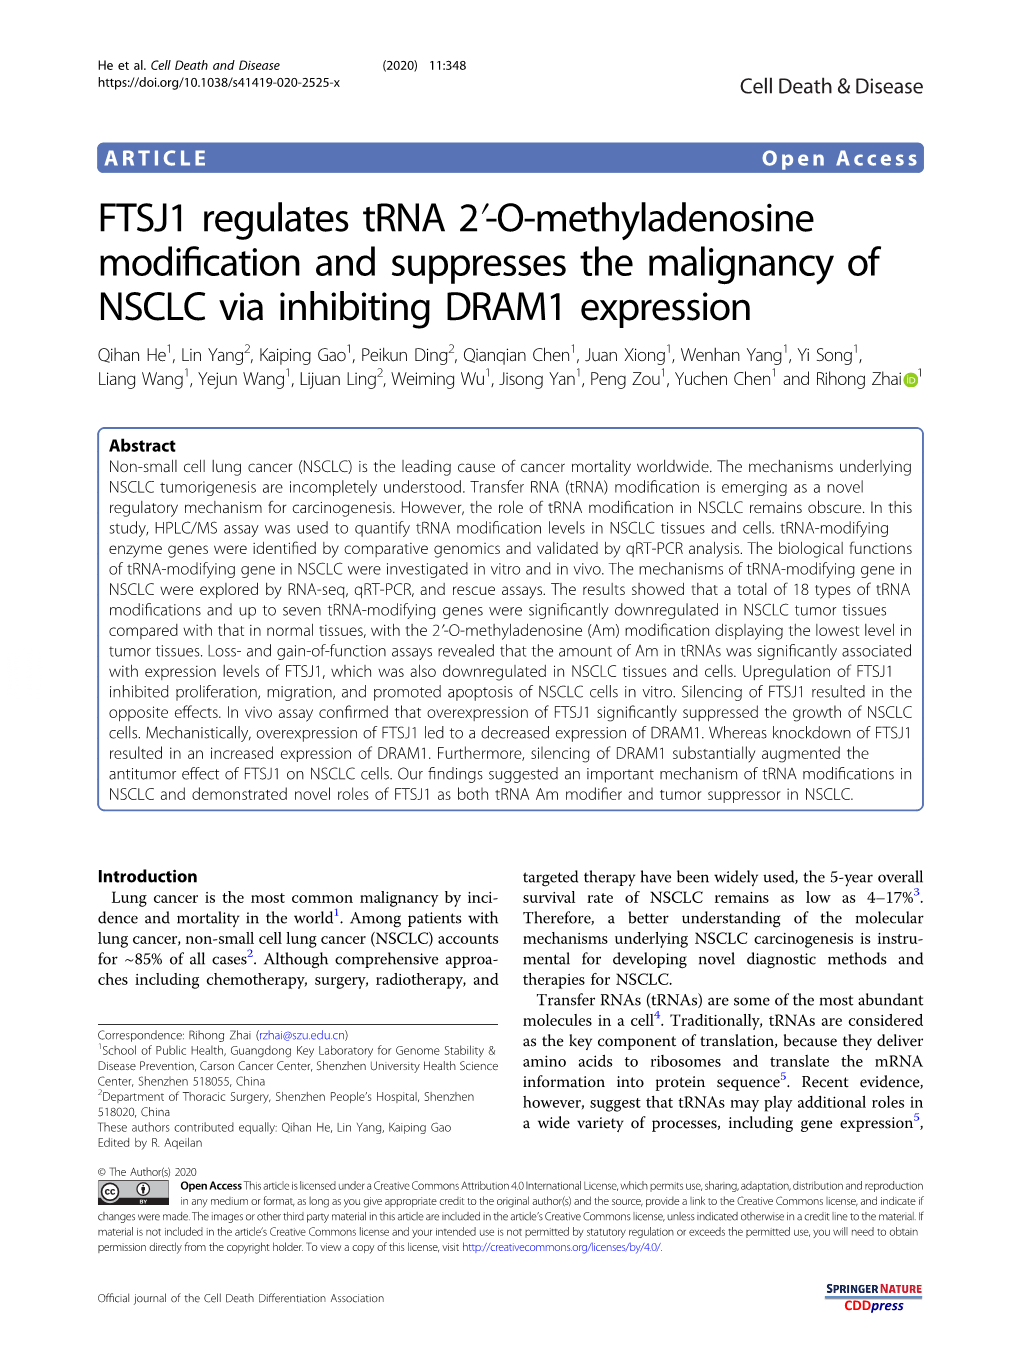 FTSJ1 Regulates Trna 2ʹ-O-Methyladenosine